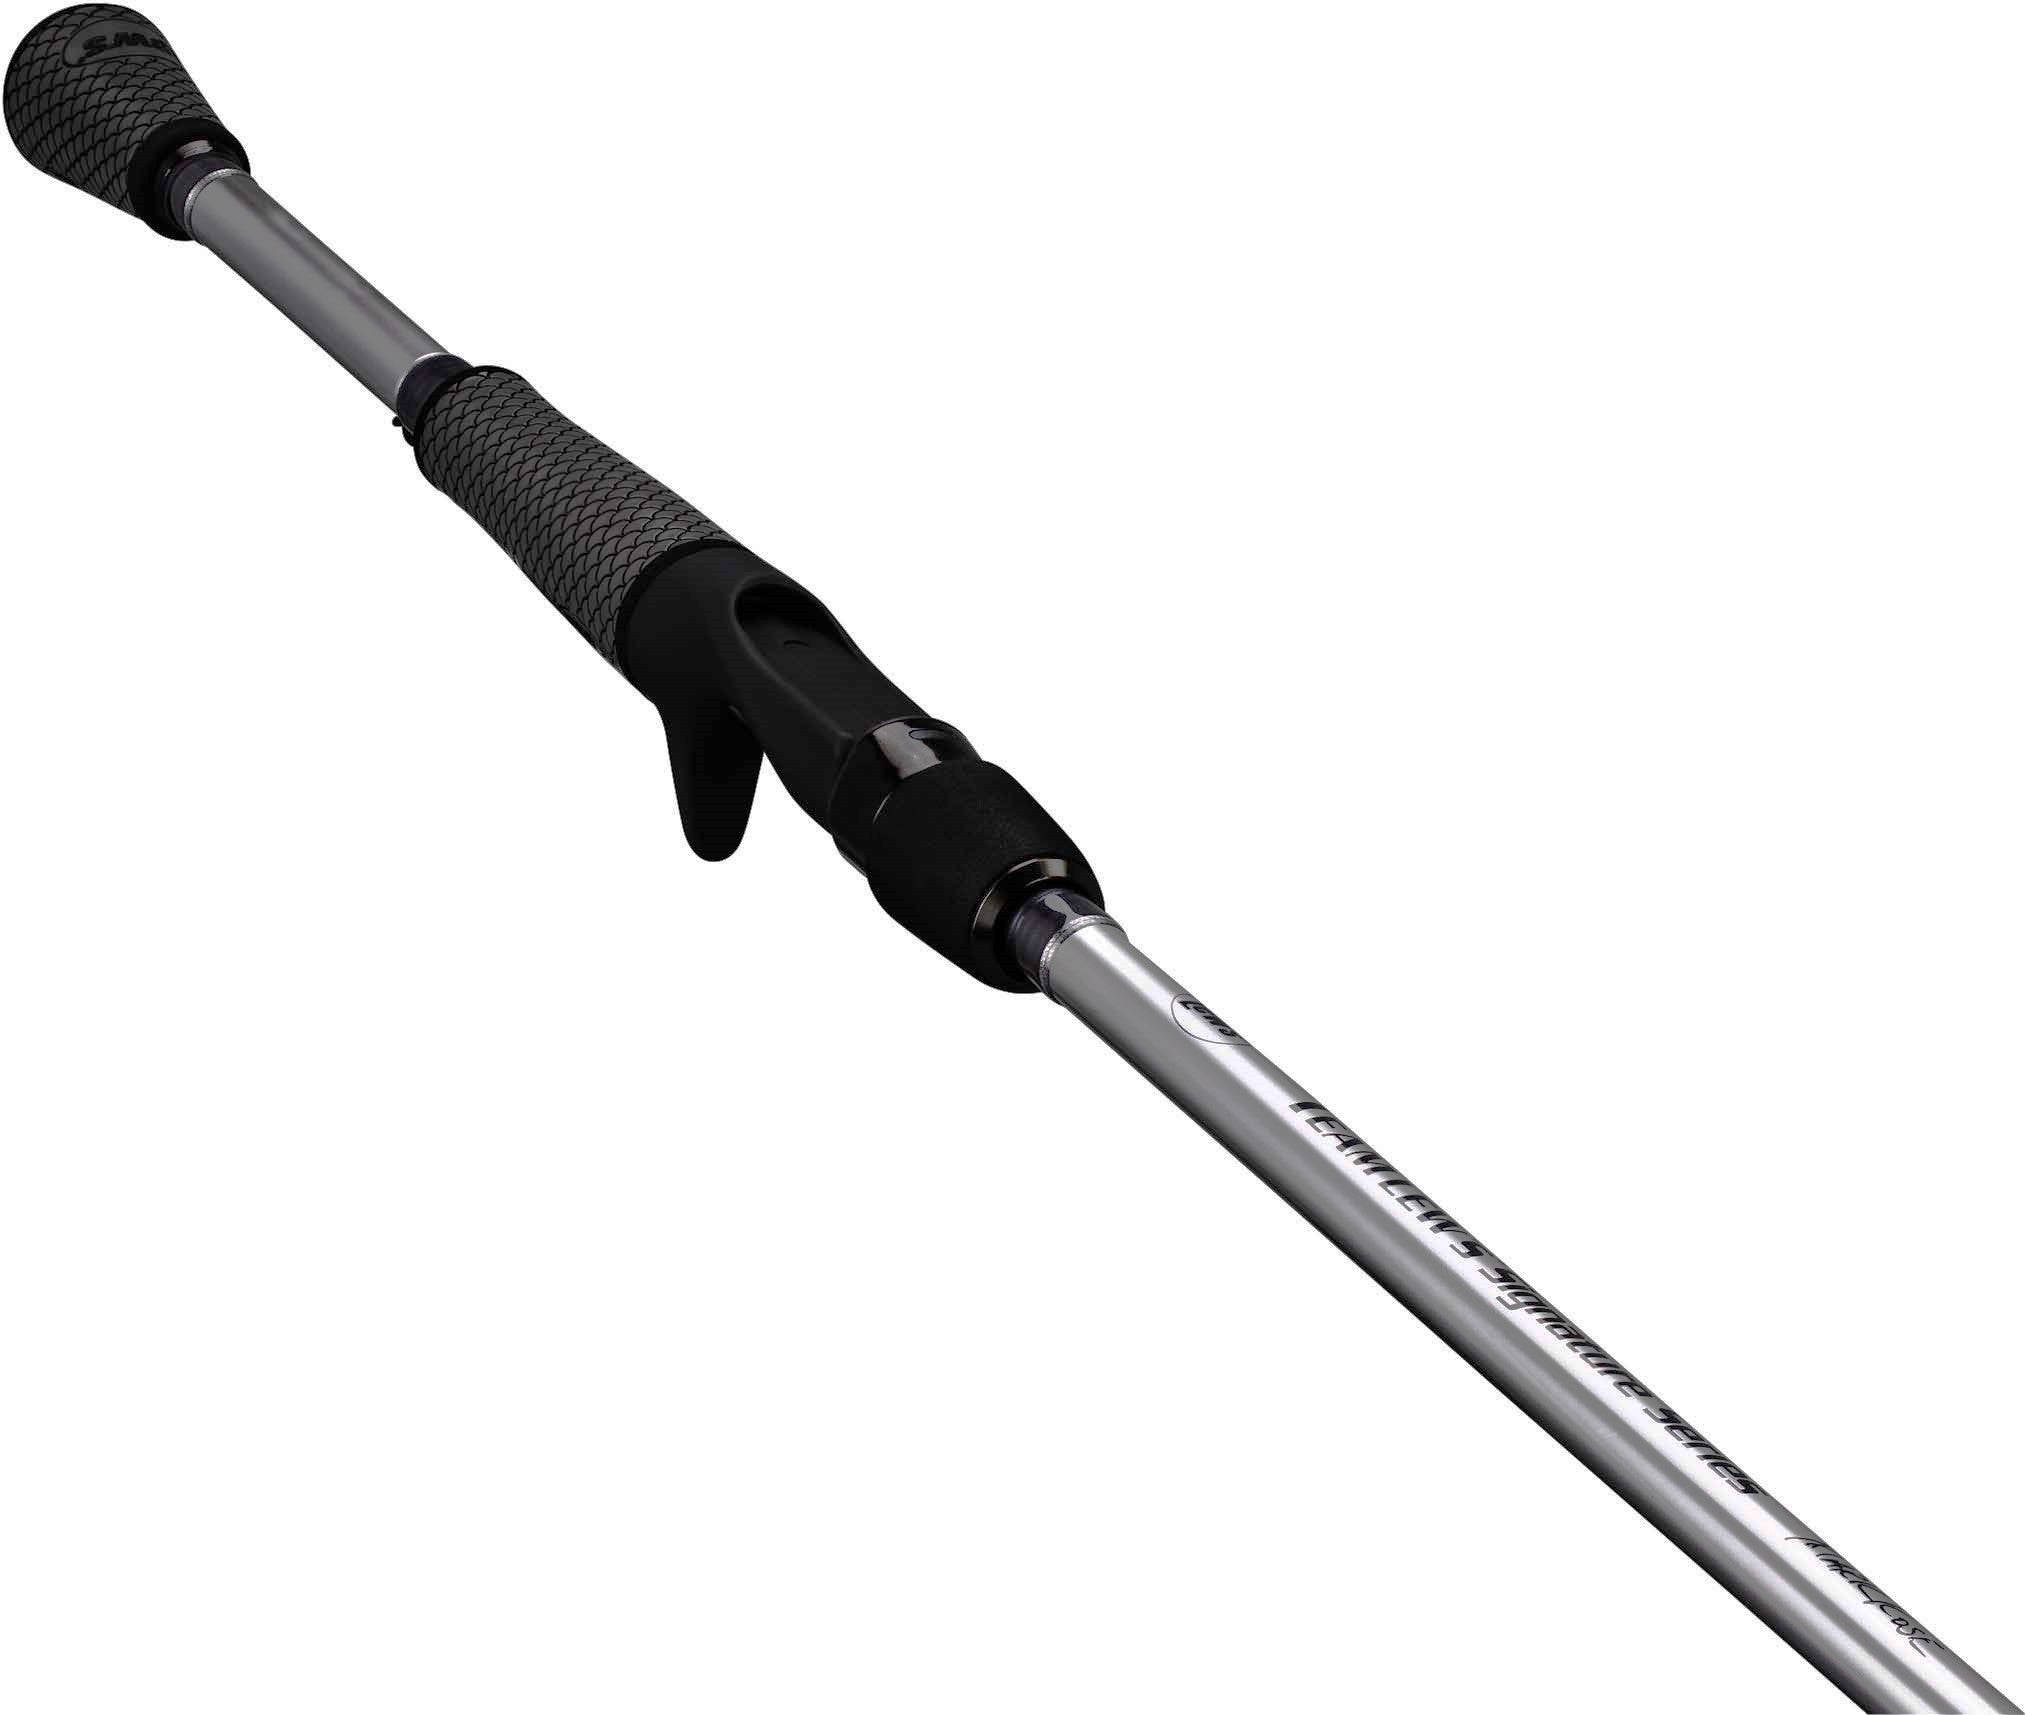  Lew's Bream Stick 10' Ultra Light Fishing Pole